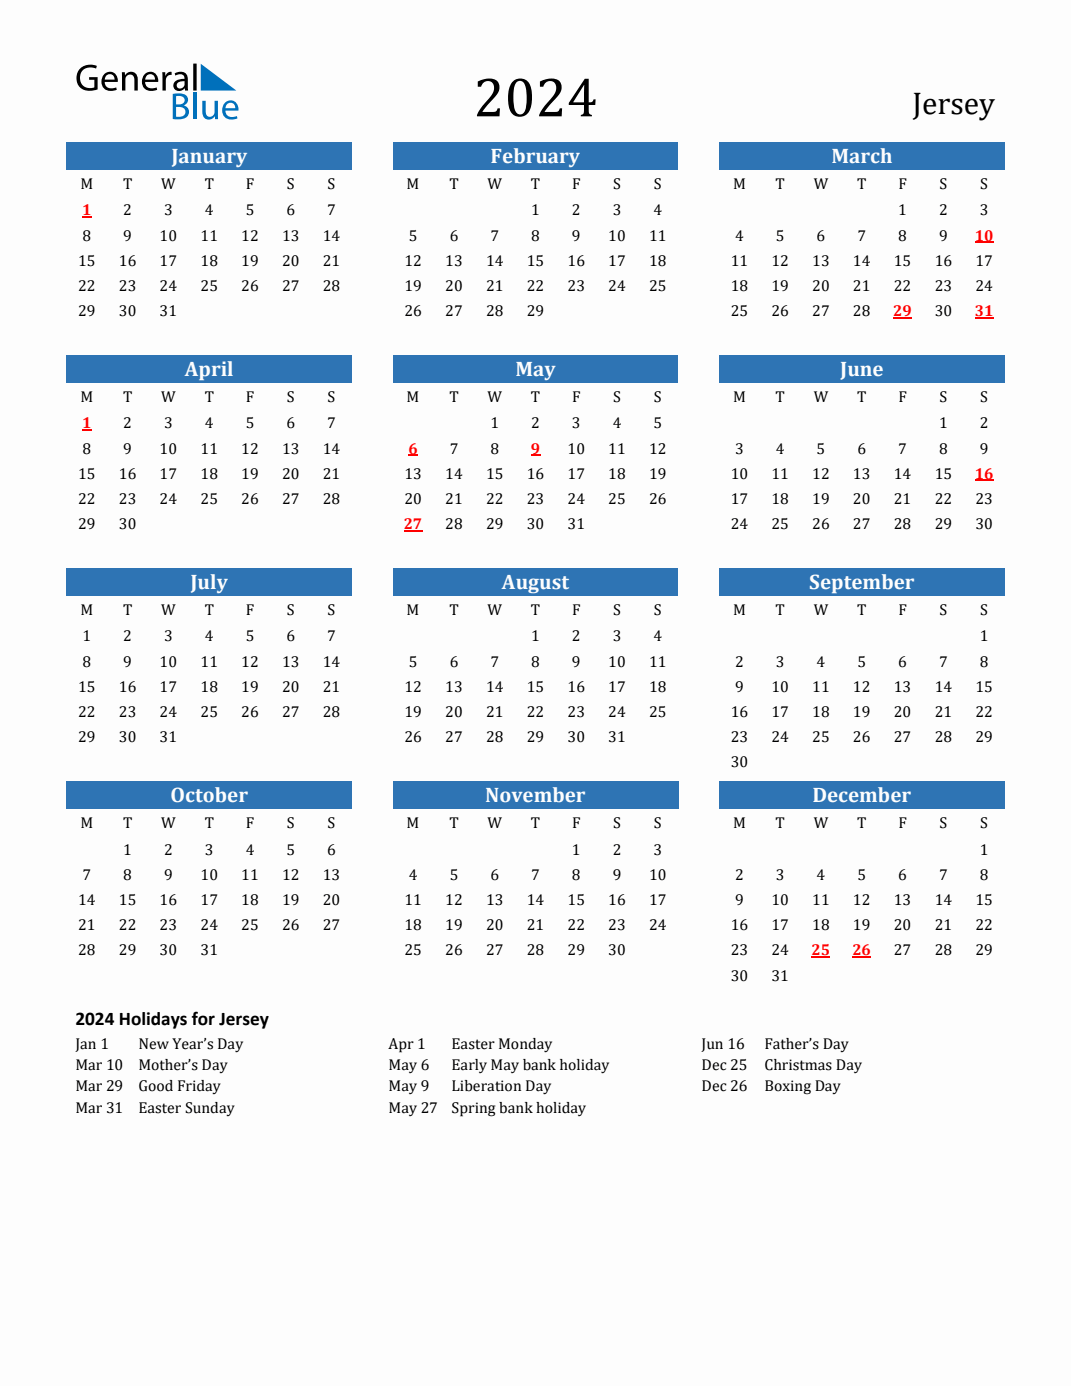 2024 Holiday Calendar for Jersey Monday Start